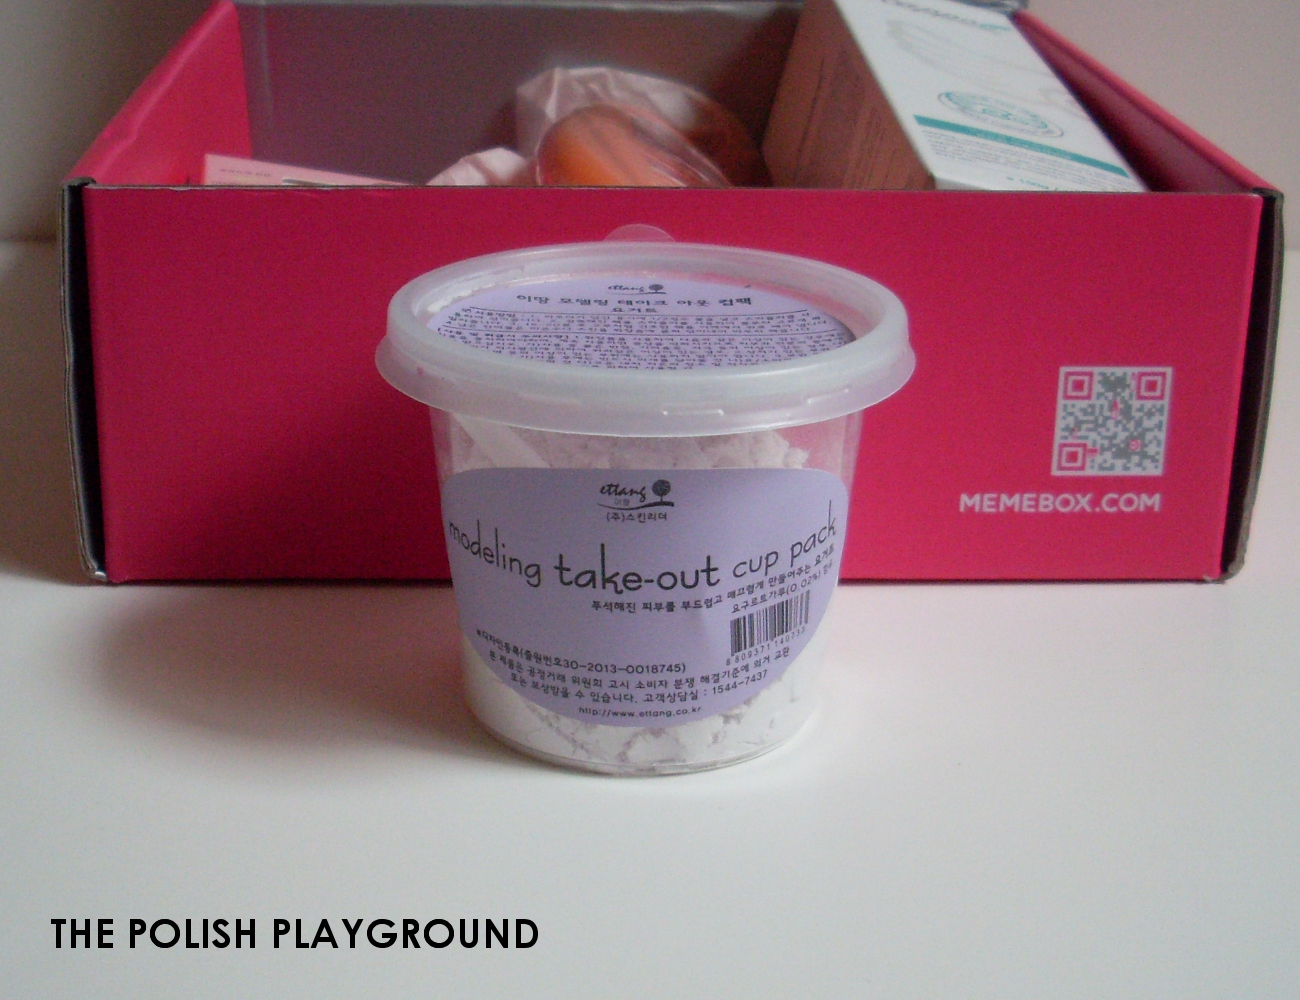 Memebox Superbox #54 Yogurt Cosmetics Unboxing - ettang Modeling Take-out Cup Pack Yogurt